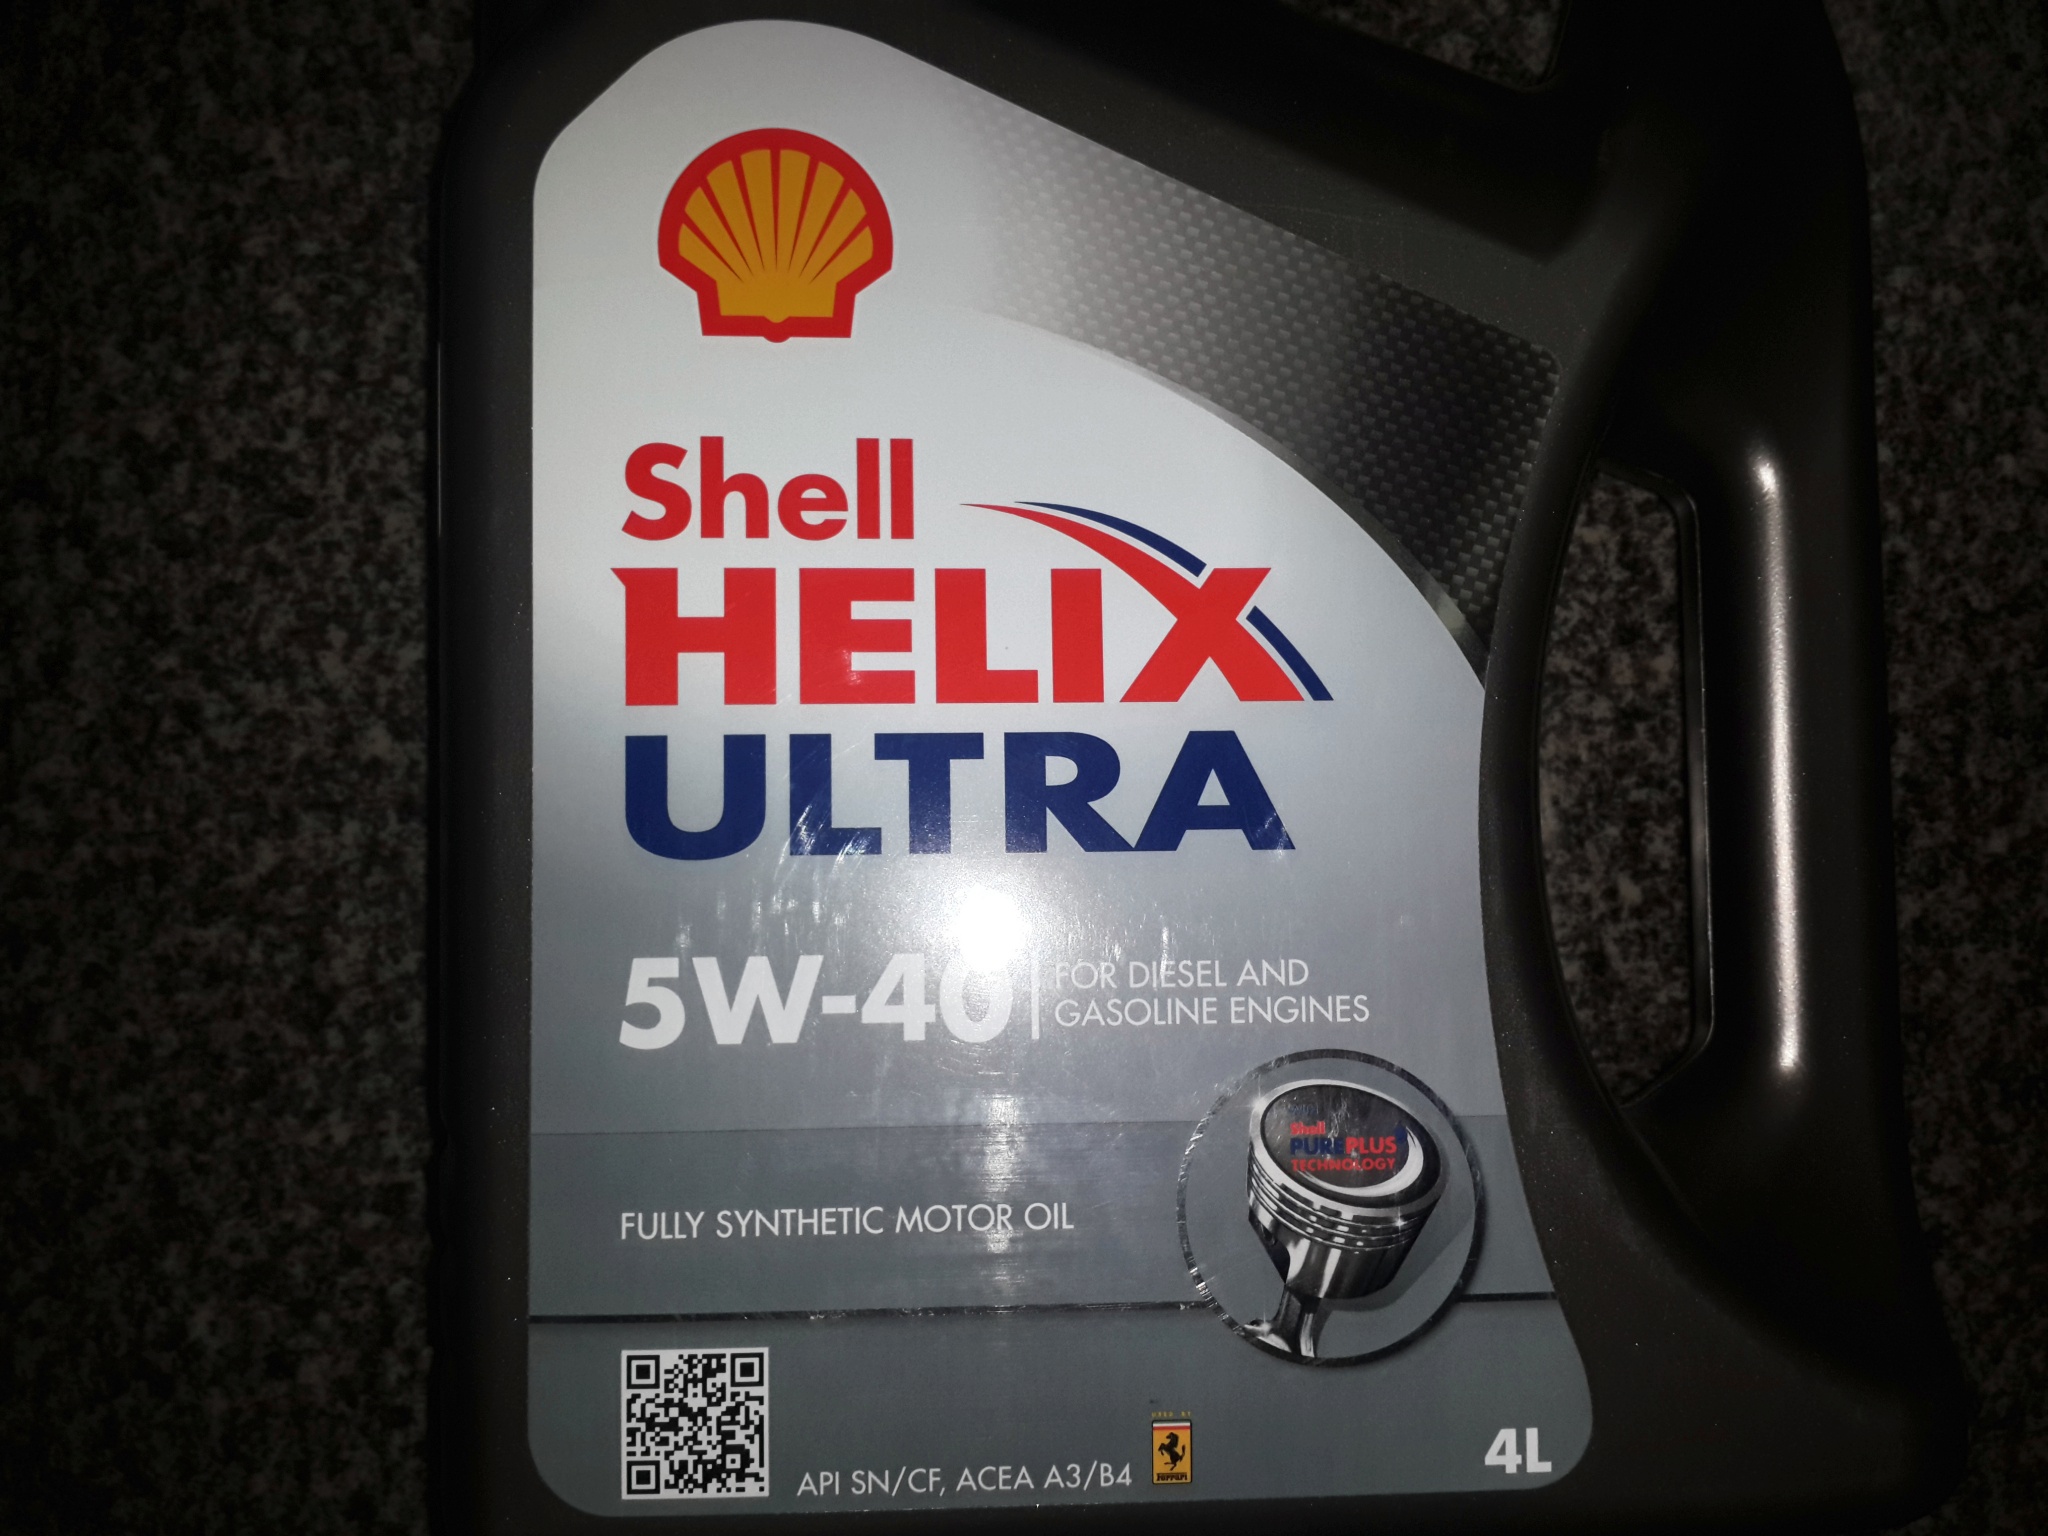 Shell Helix Ultra 5w-40, 4 л. Масло моторное синтетическое Shell Helix Ultra 5w40 550040755 4 л. Моторное масло Shell Helix Ultra 5w-40 синтетическое 4 л. 550040755 Shell масло Shell Helix Ultra 5w40 мот. Син. (4л).